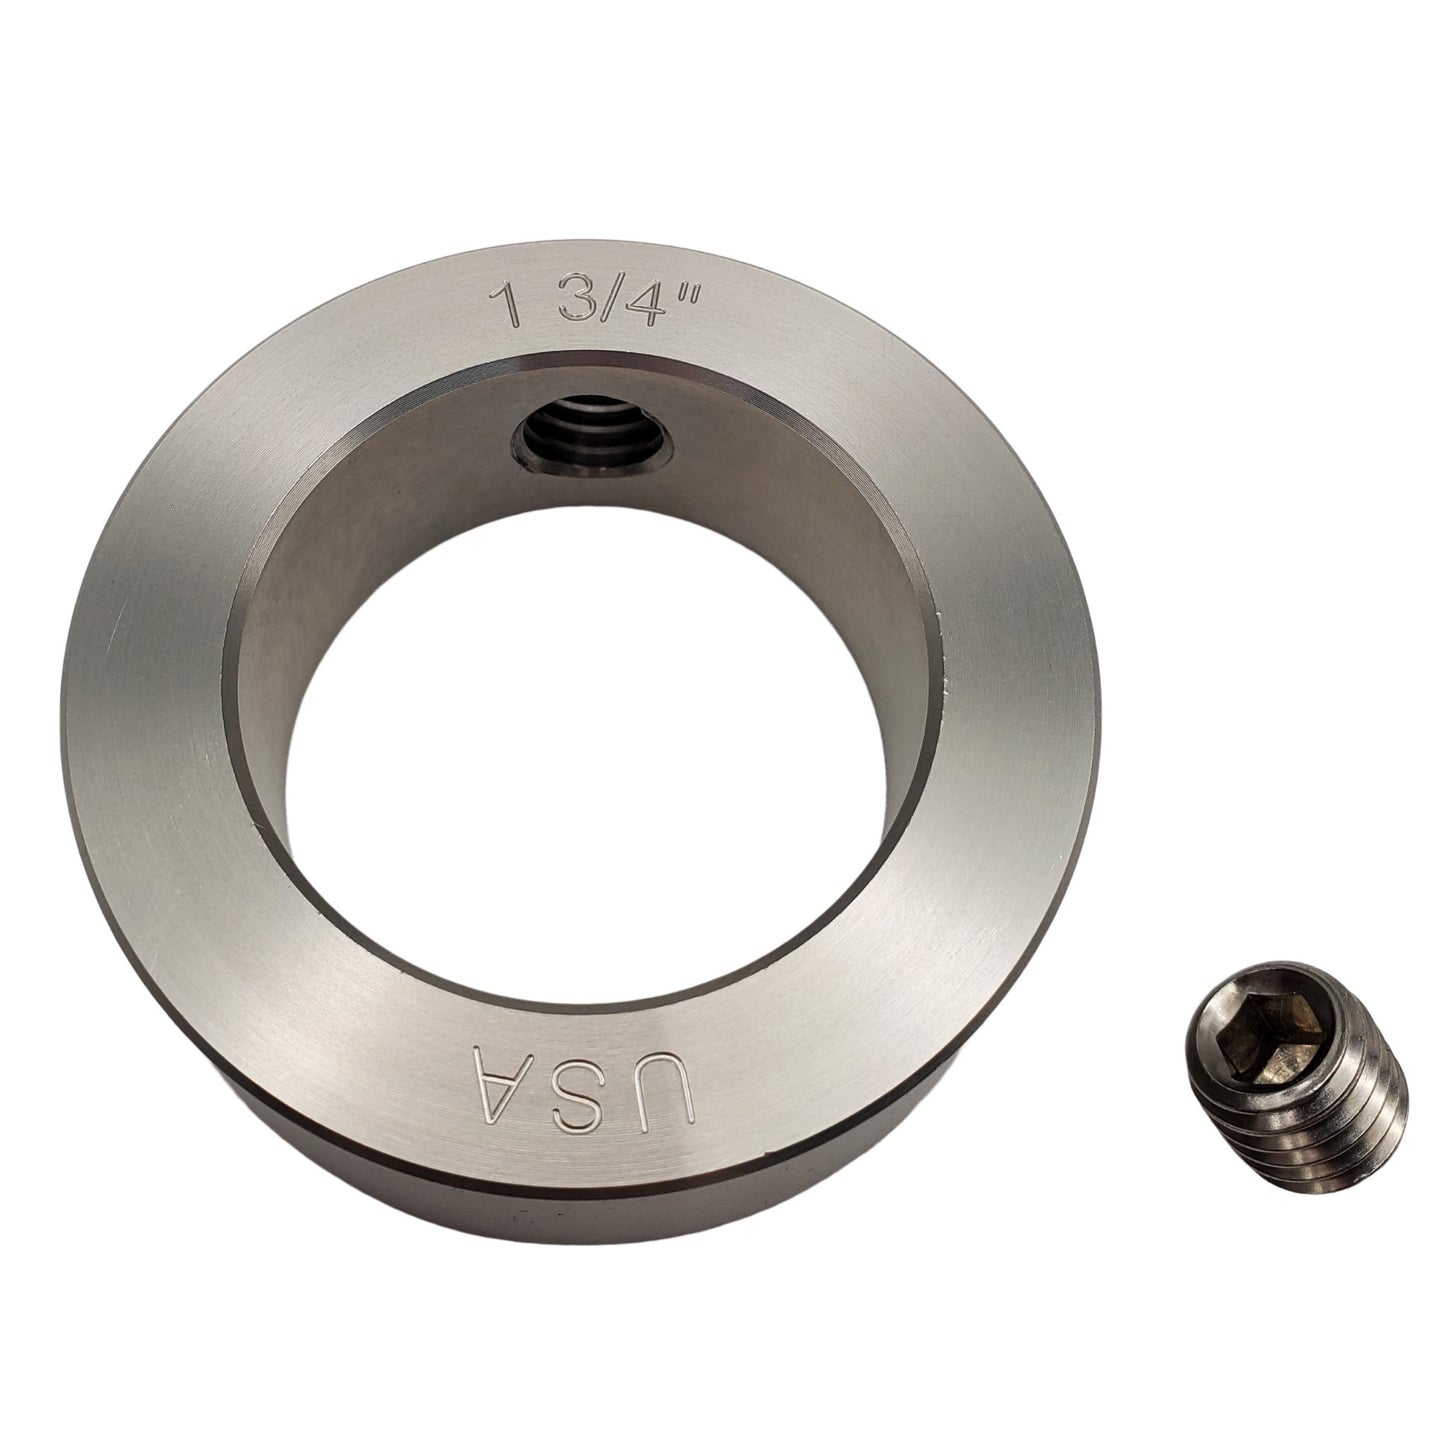 1.75" Diameter - Set Screw Shaft Collar - 303 Stainless Steel